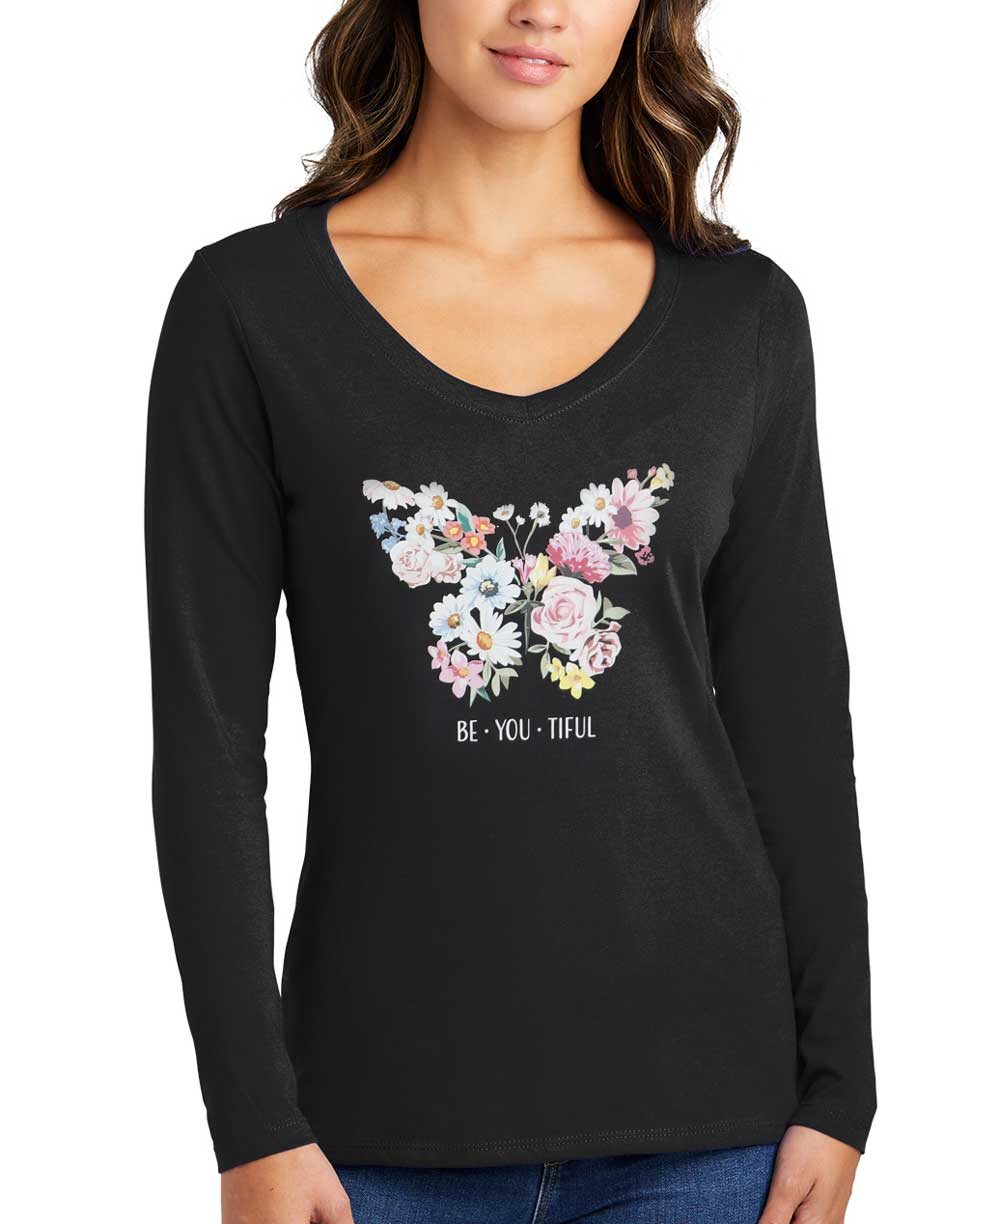 BeYouTiful Women's T-Shirt with Butterfly Design - Shirts & Tops S